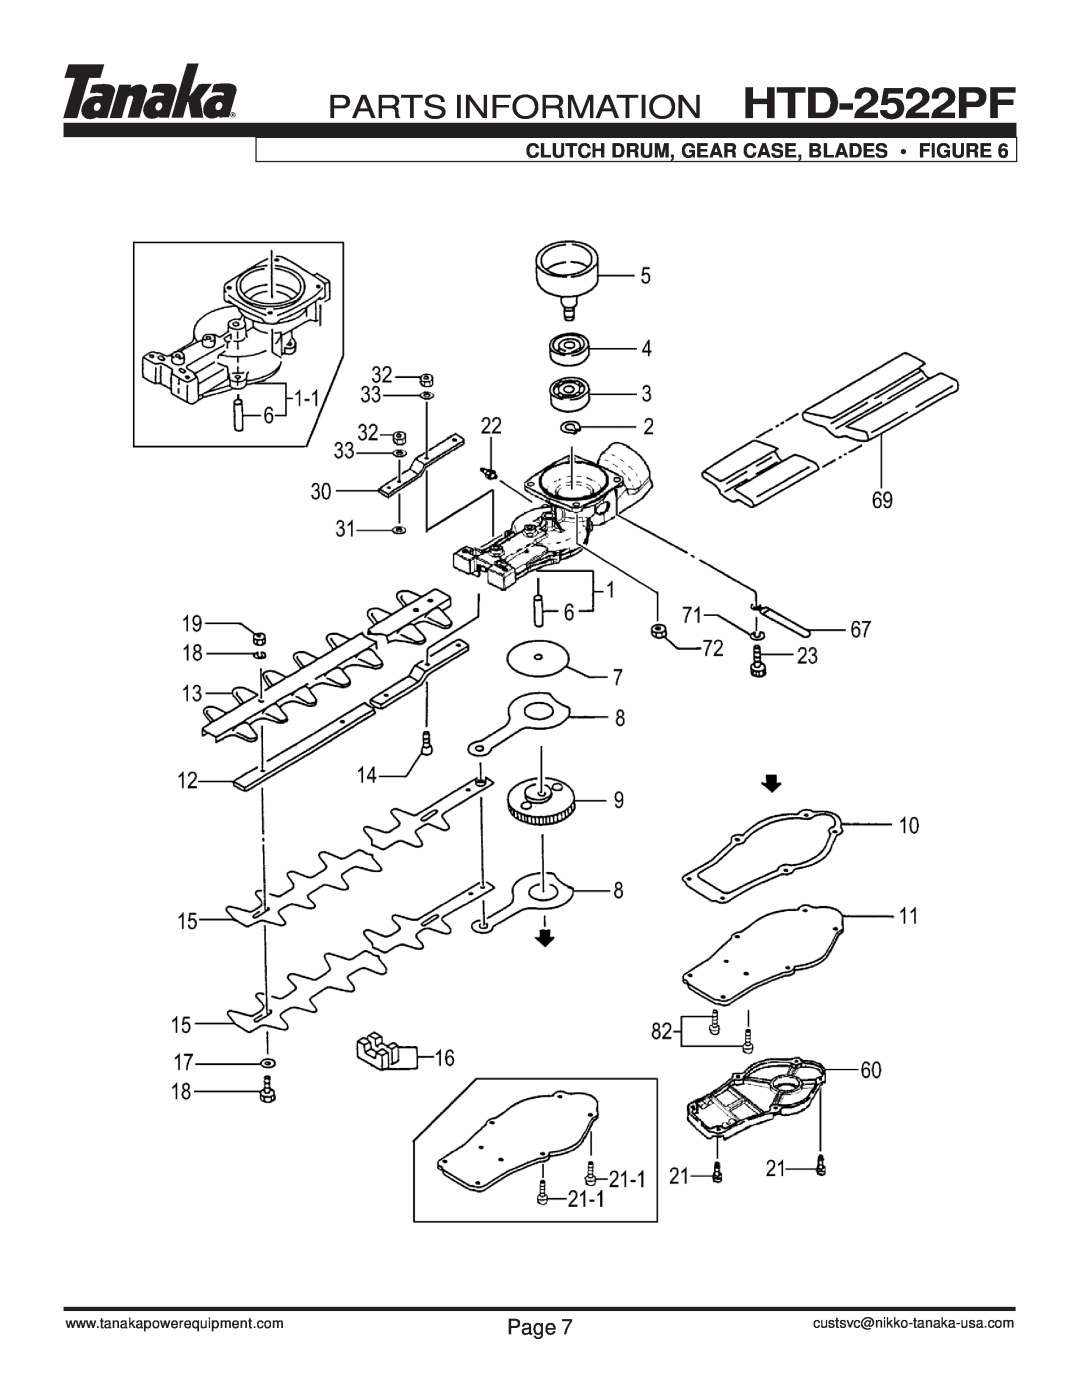 Tanaka manual Clutch Drum, Gear Case, Blades Figure, PARTS INFORMATION HTD-2522PF, Page, custsvc@nikko-tanaka-usa.com 